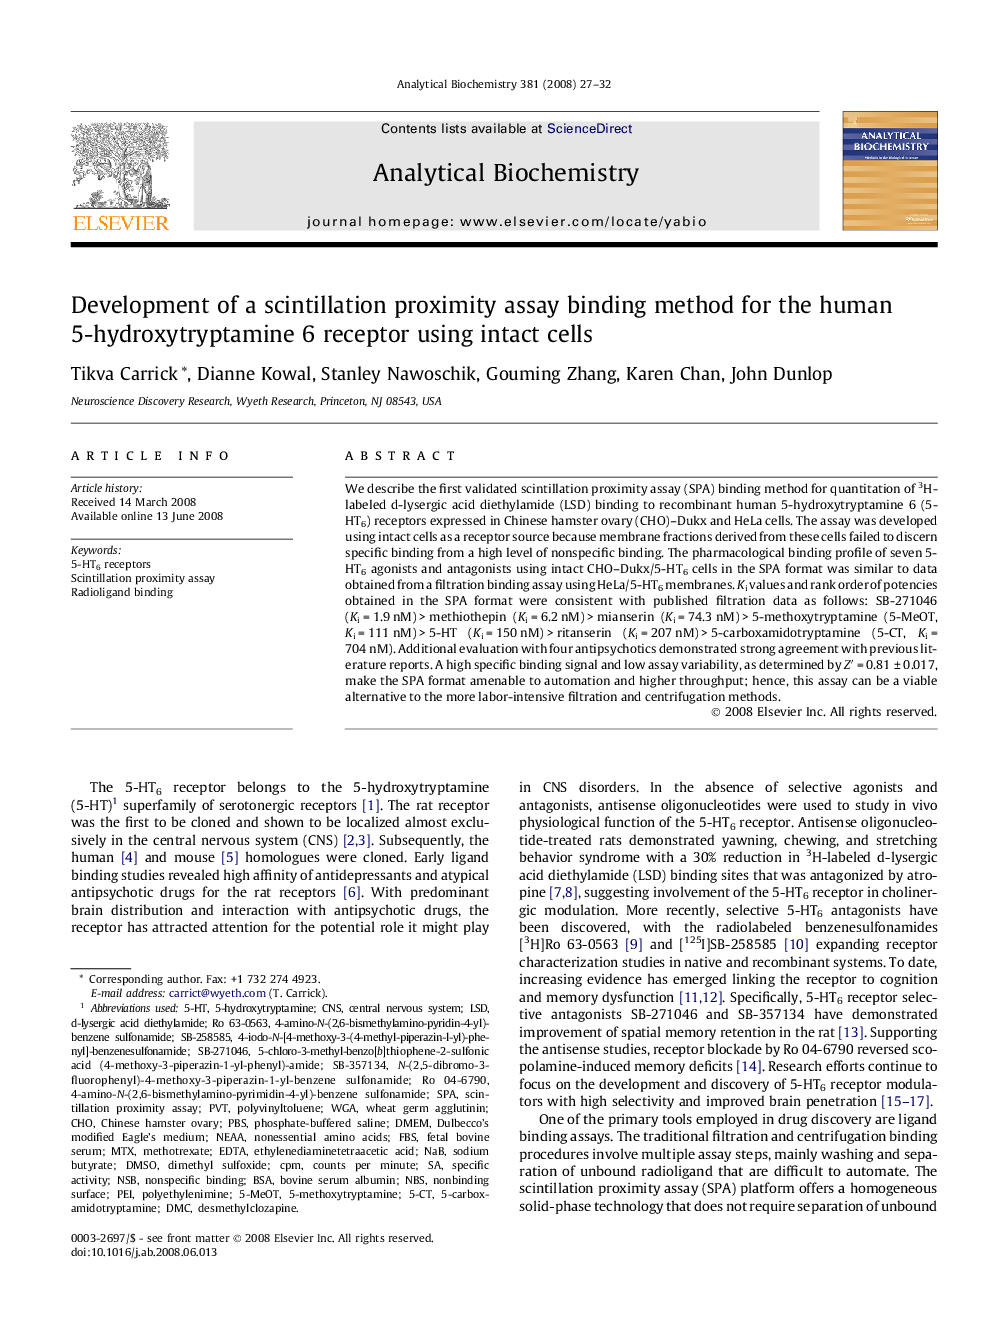 Development of a scintillation proximity assay binding method for the human 5-hydroxytryptamine 6 receptor using intact cells